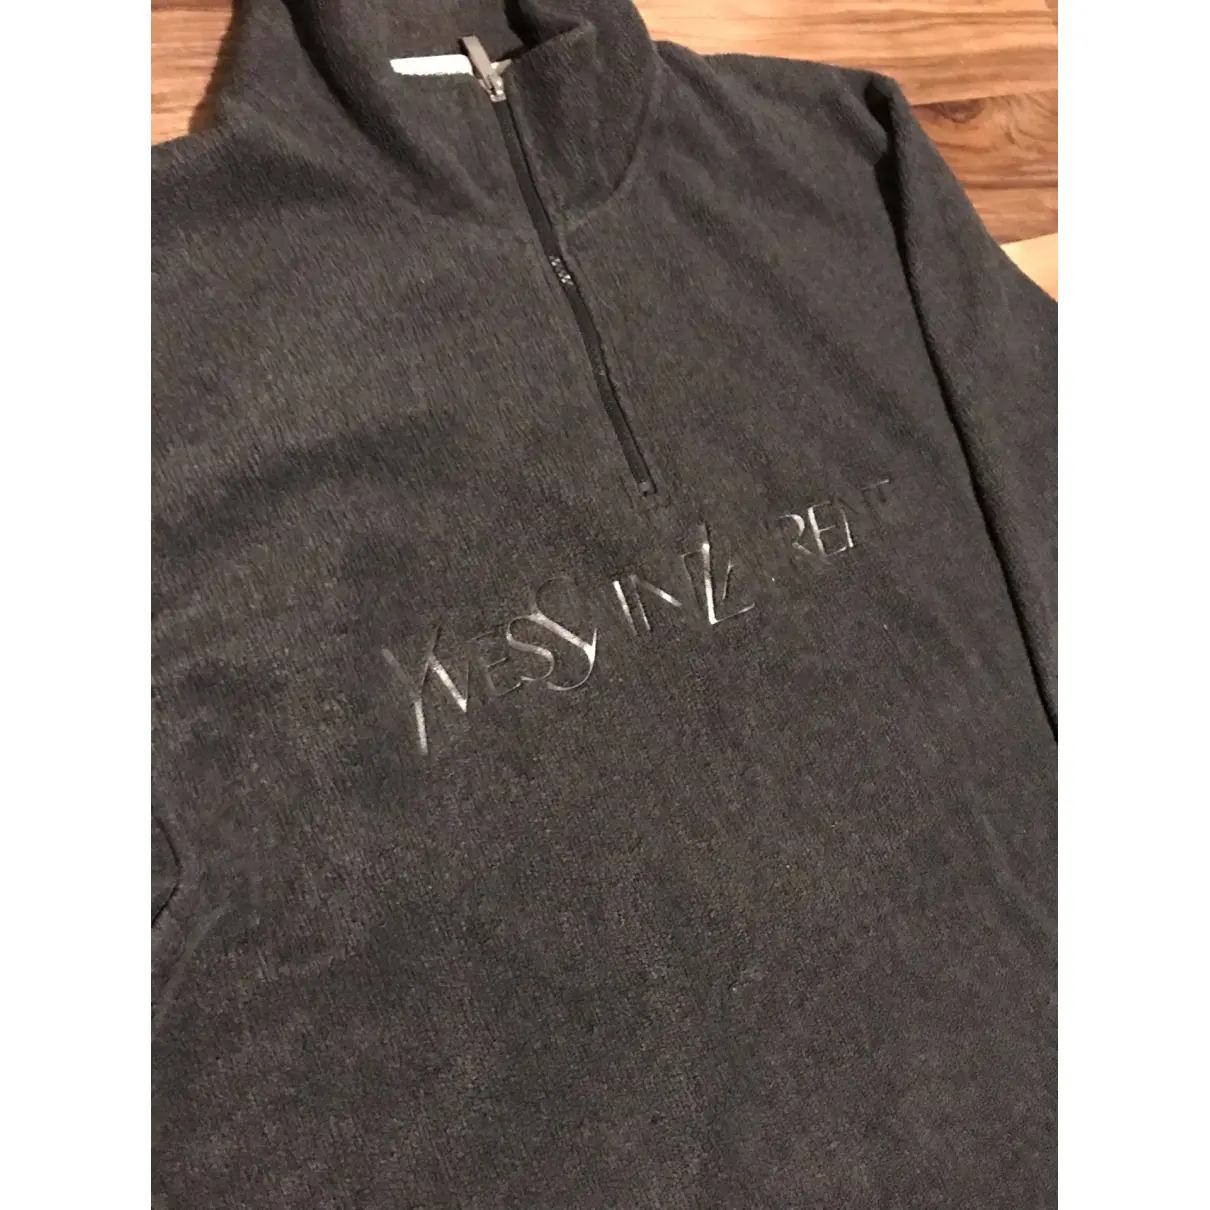 Sweatshirt Yves Saint Laurent - Vintage